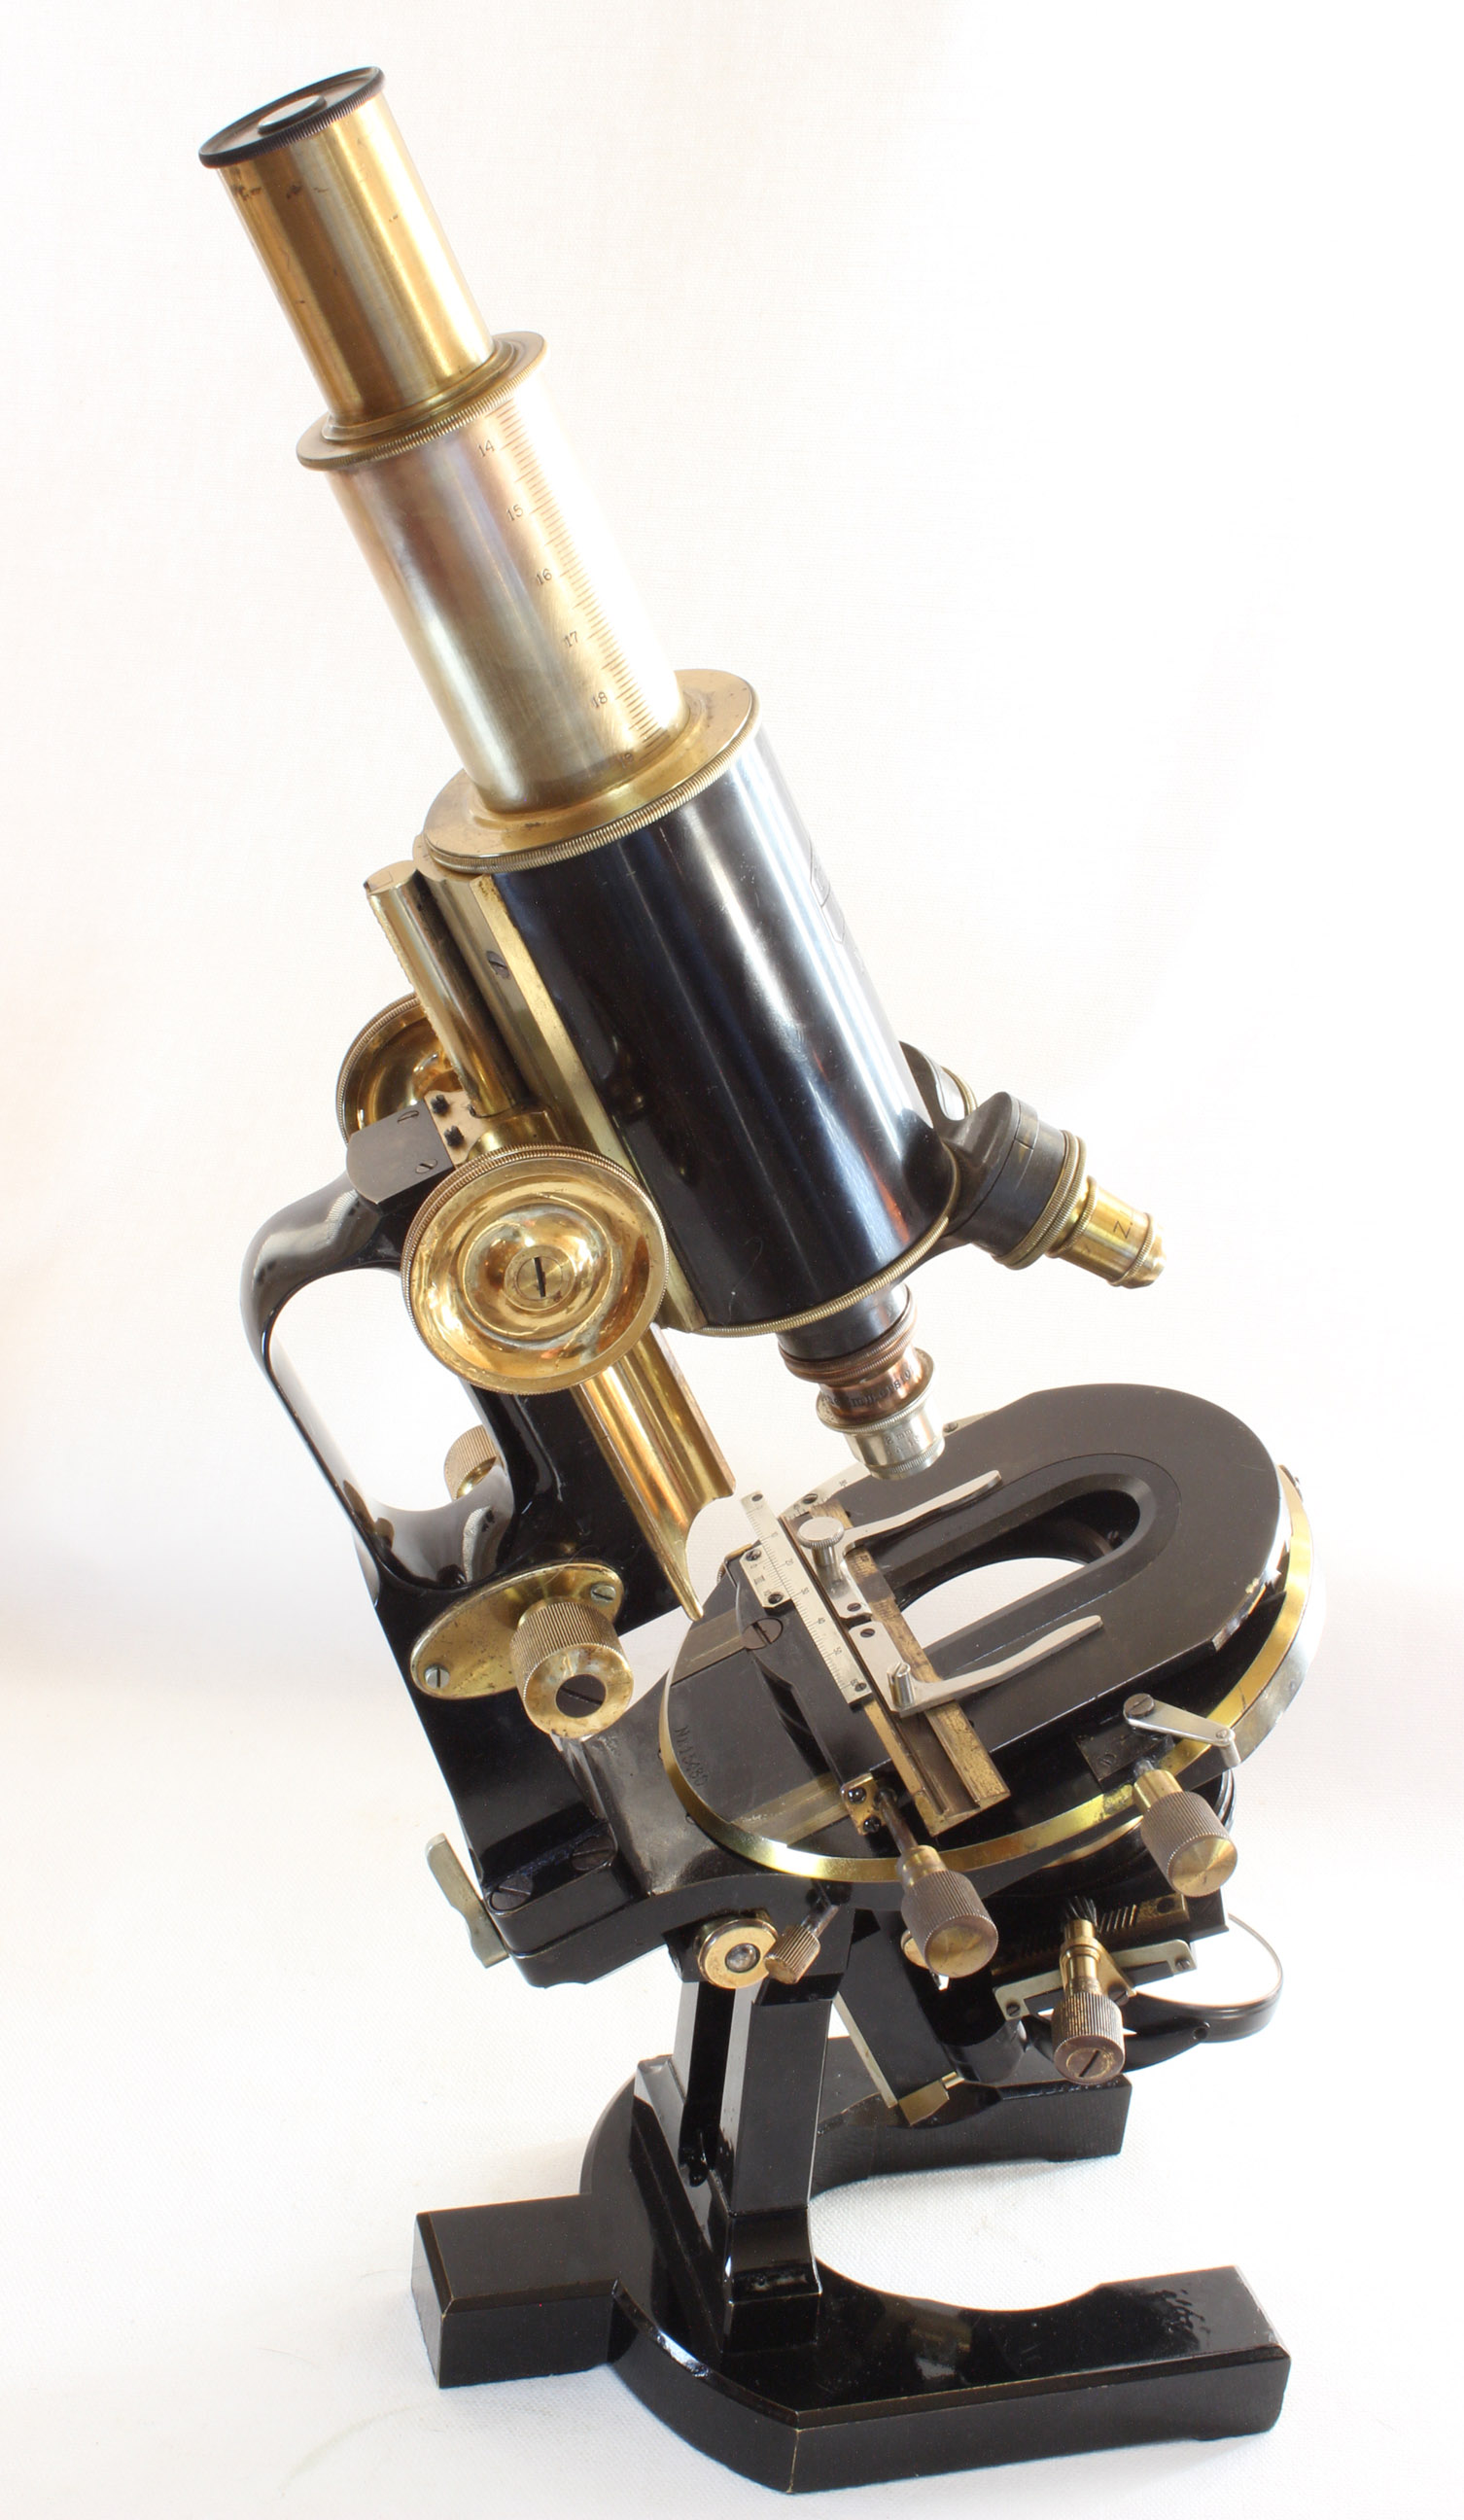 zeiss 1 b microscope